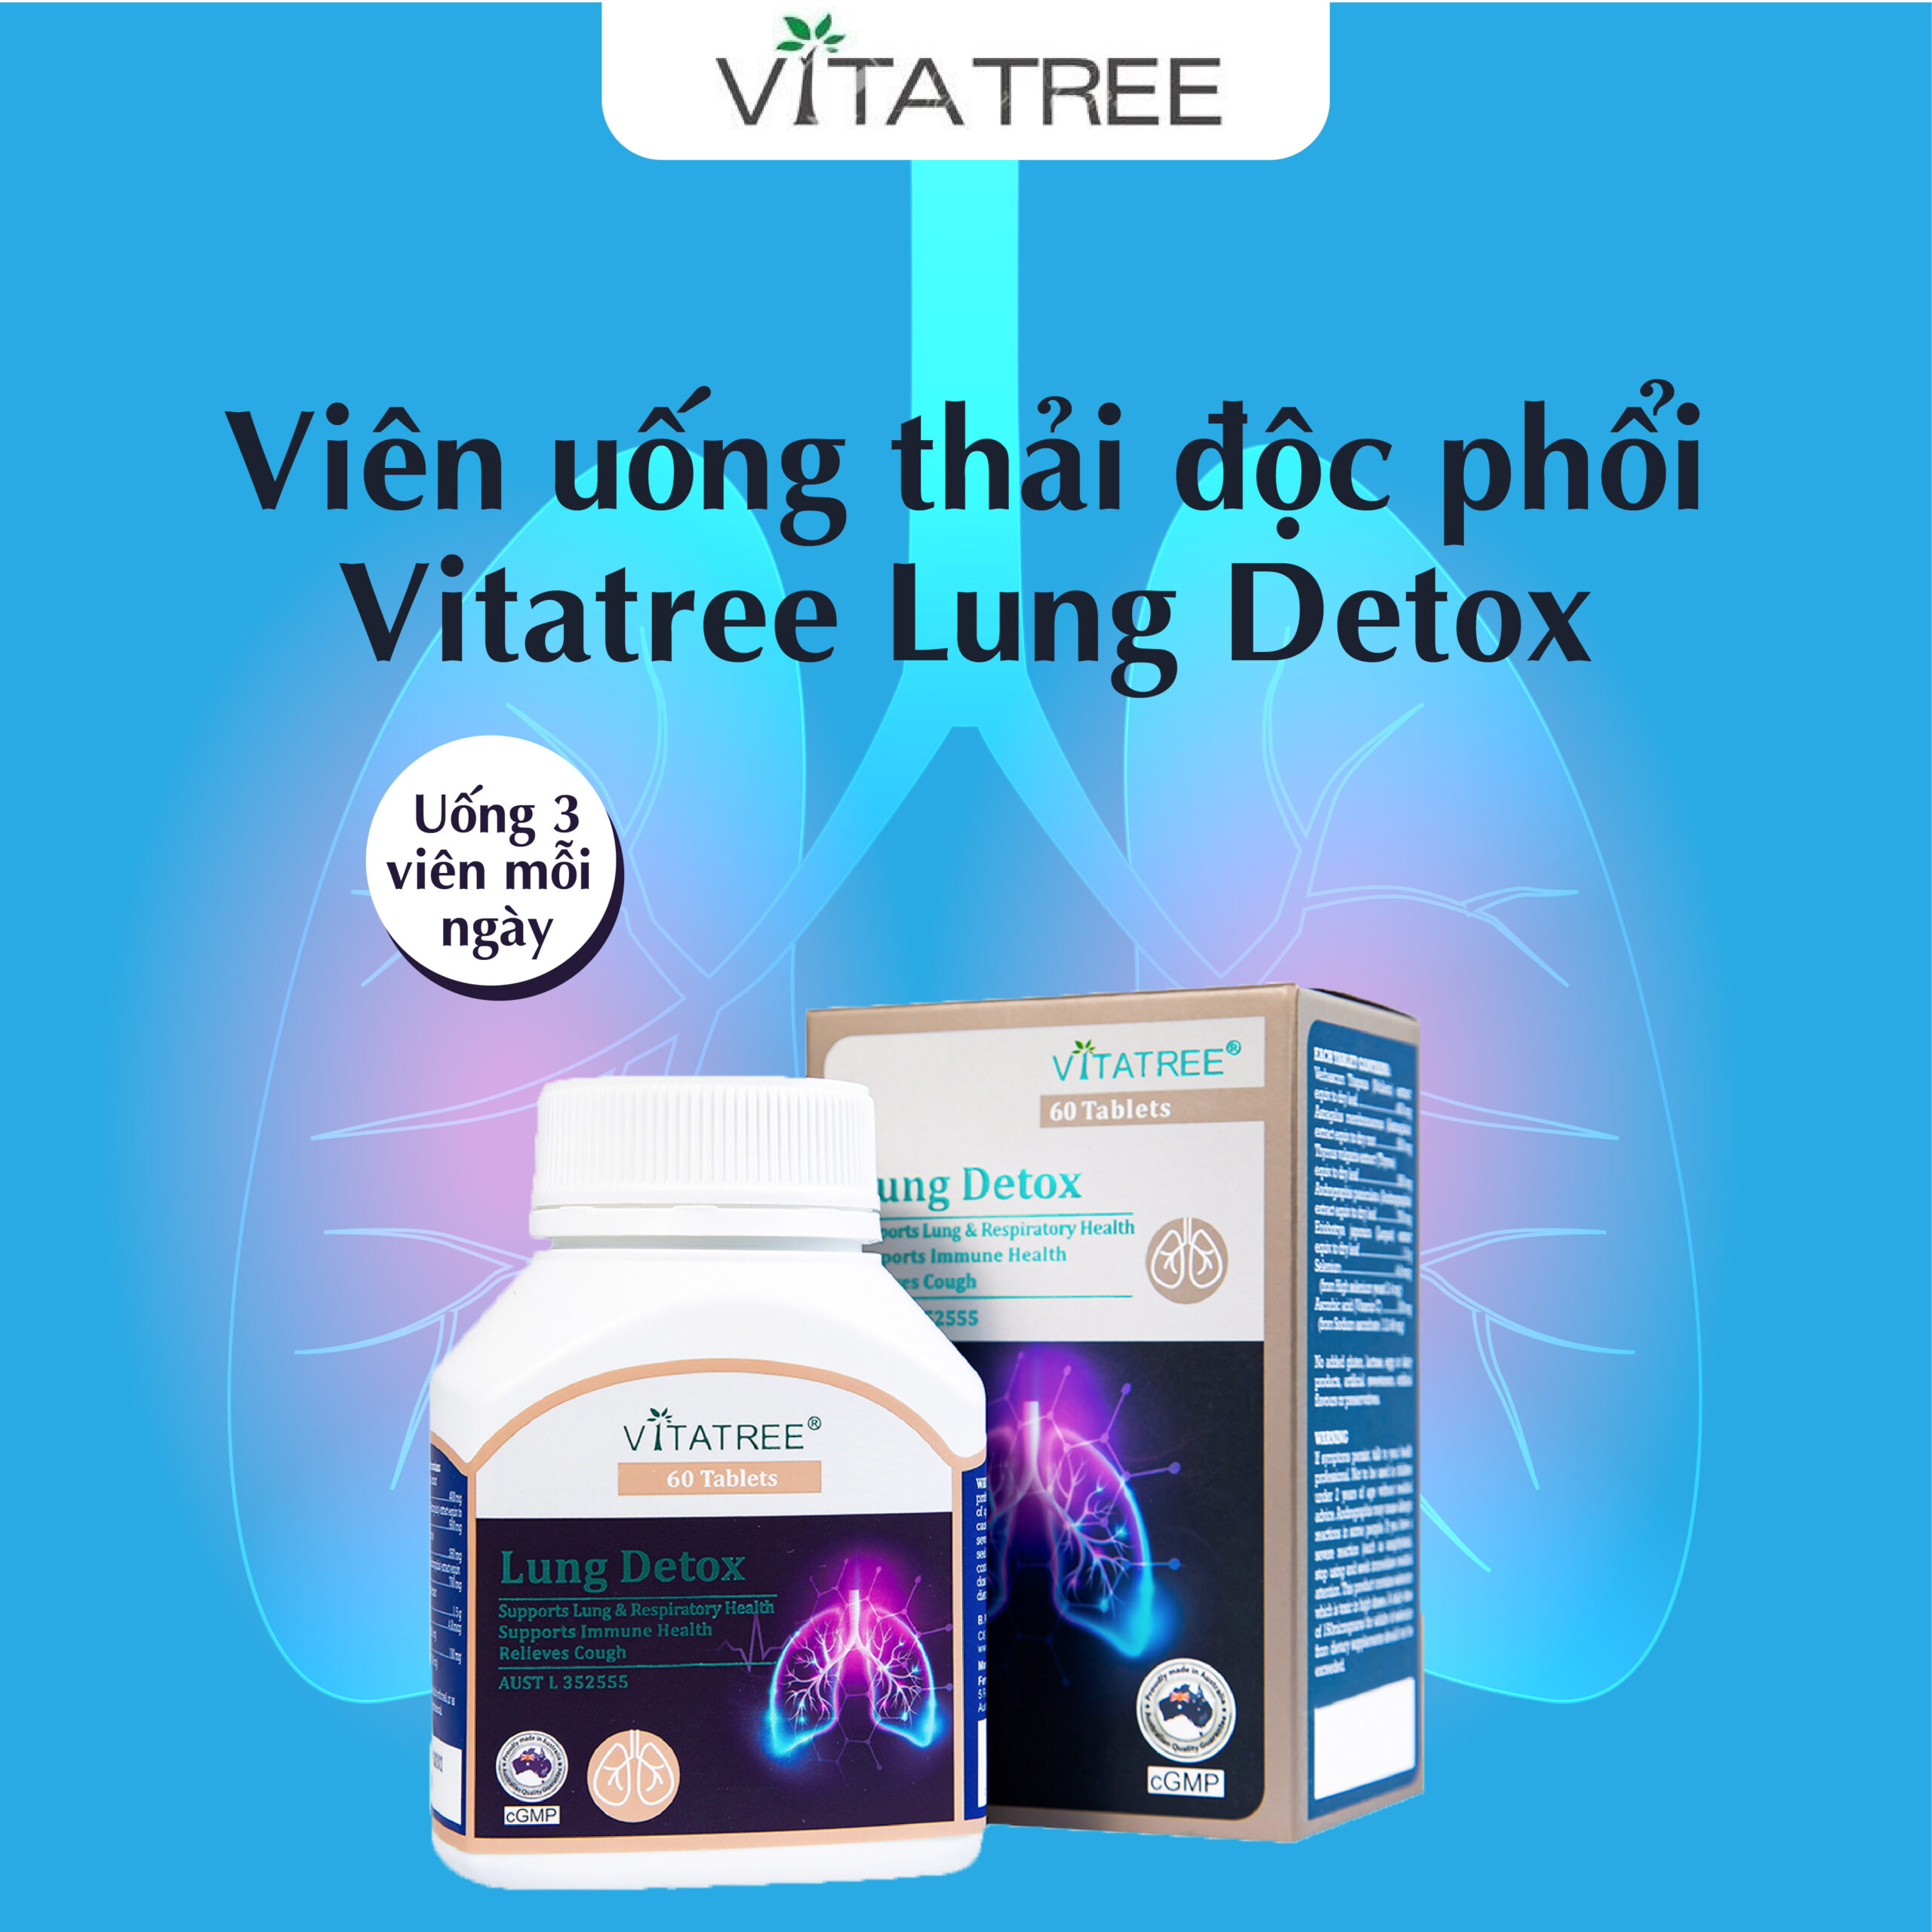 Thai doc phoi Vitatree Lung Detox3 scaled